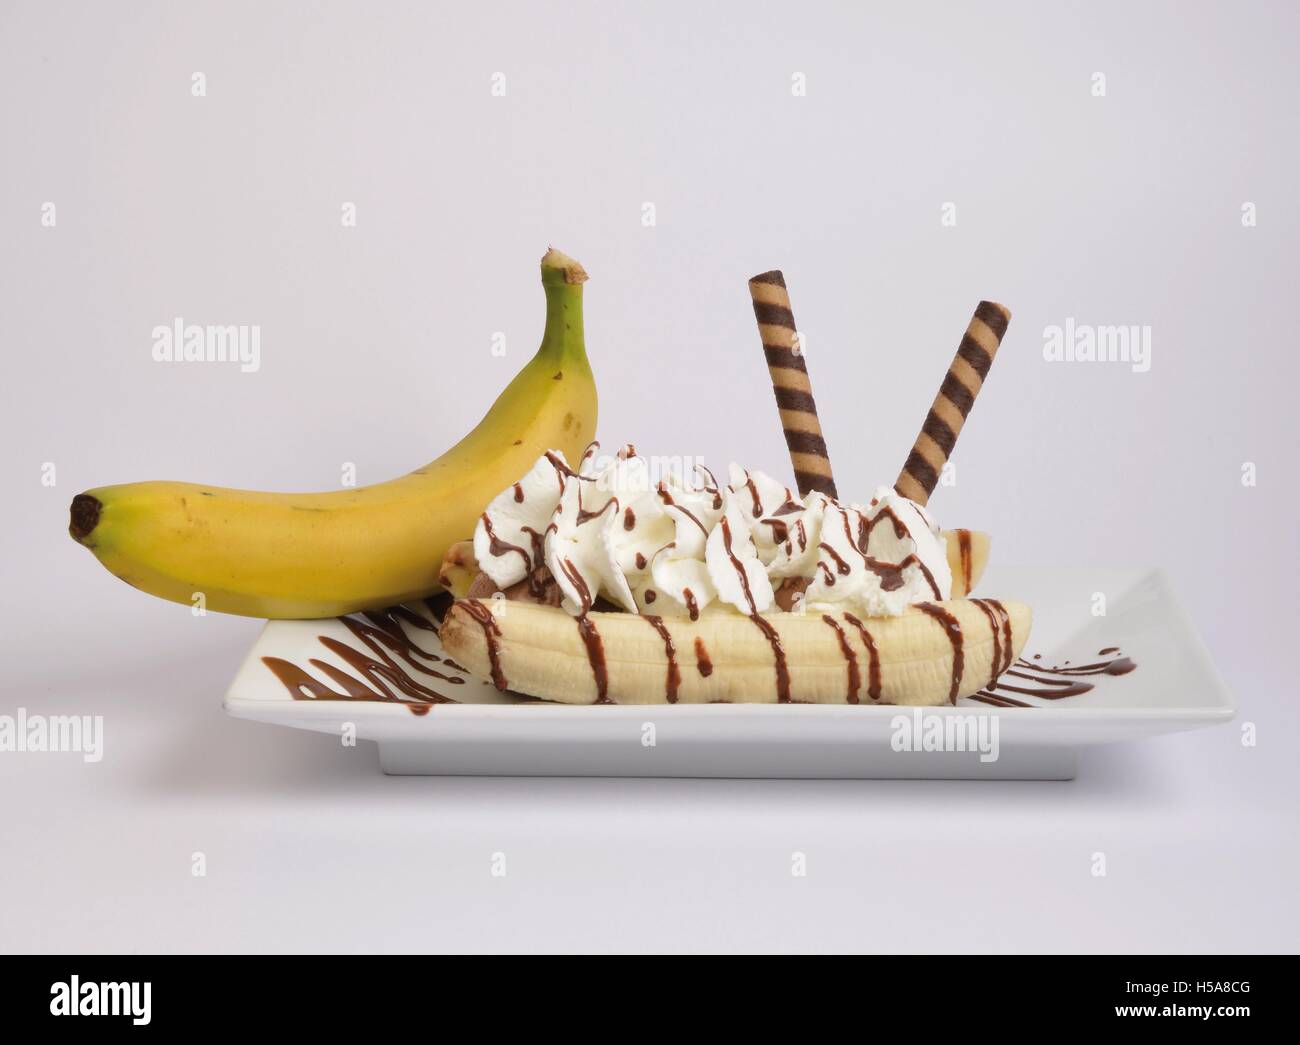 32/5000 bowl of ice cream on white background Banana Split Stock Photo